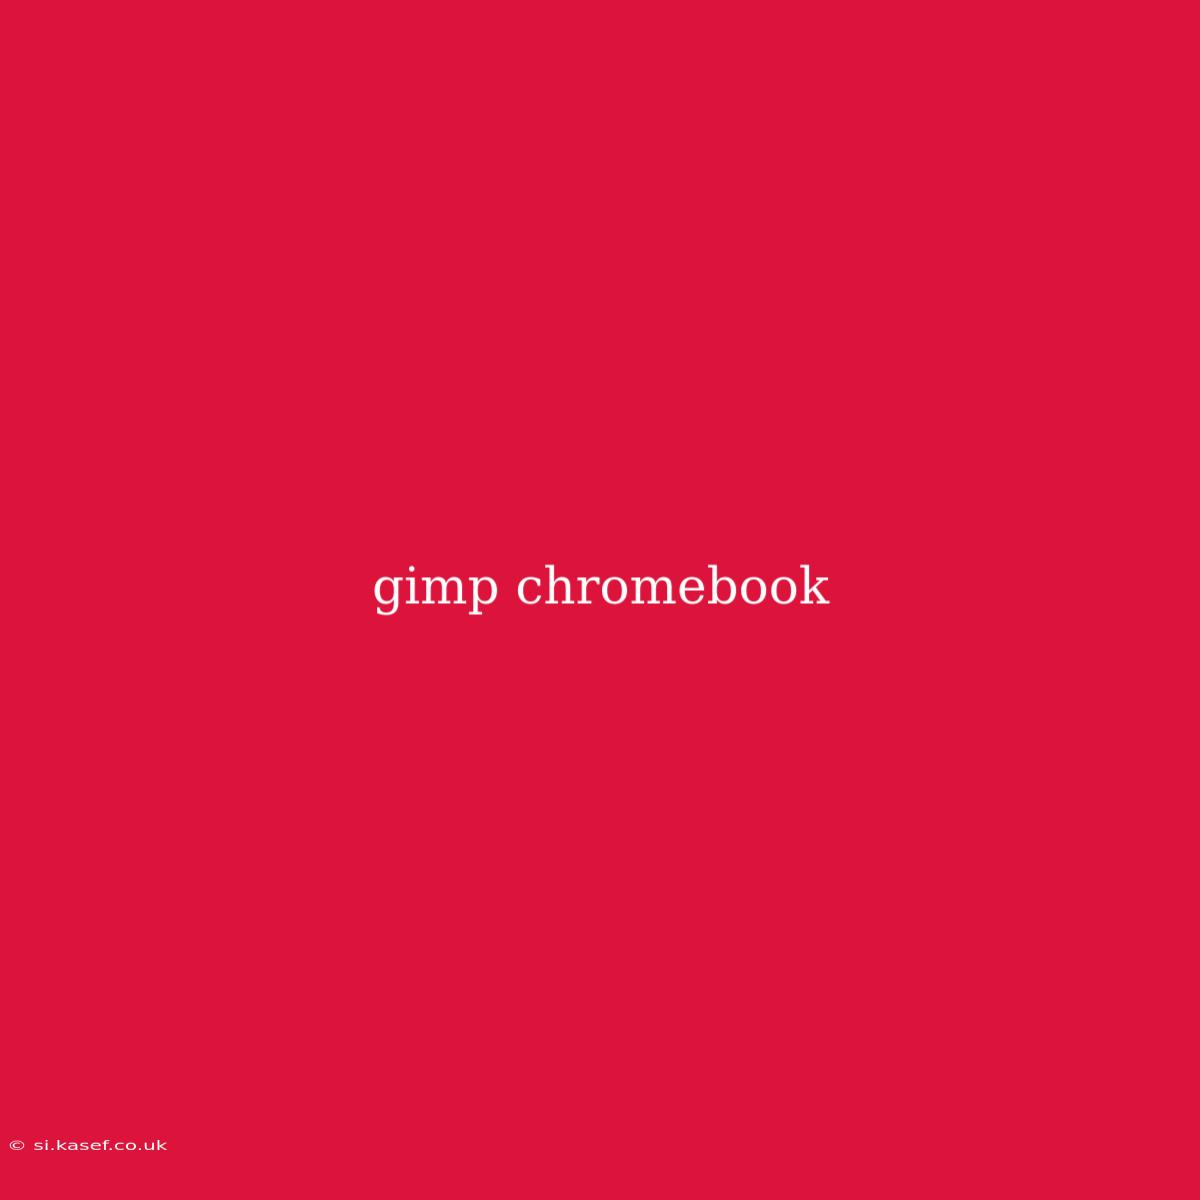 Gimp Chromebook